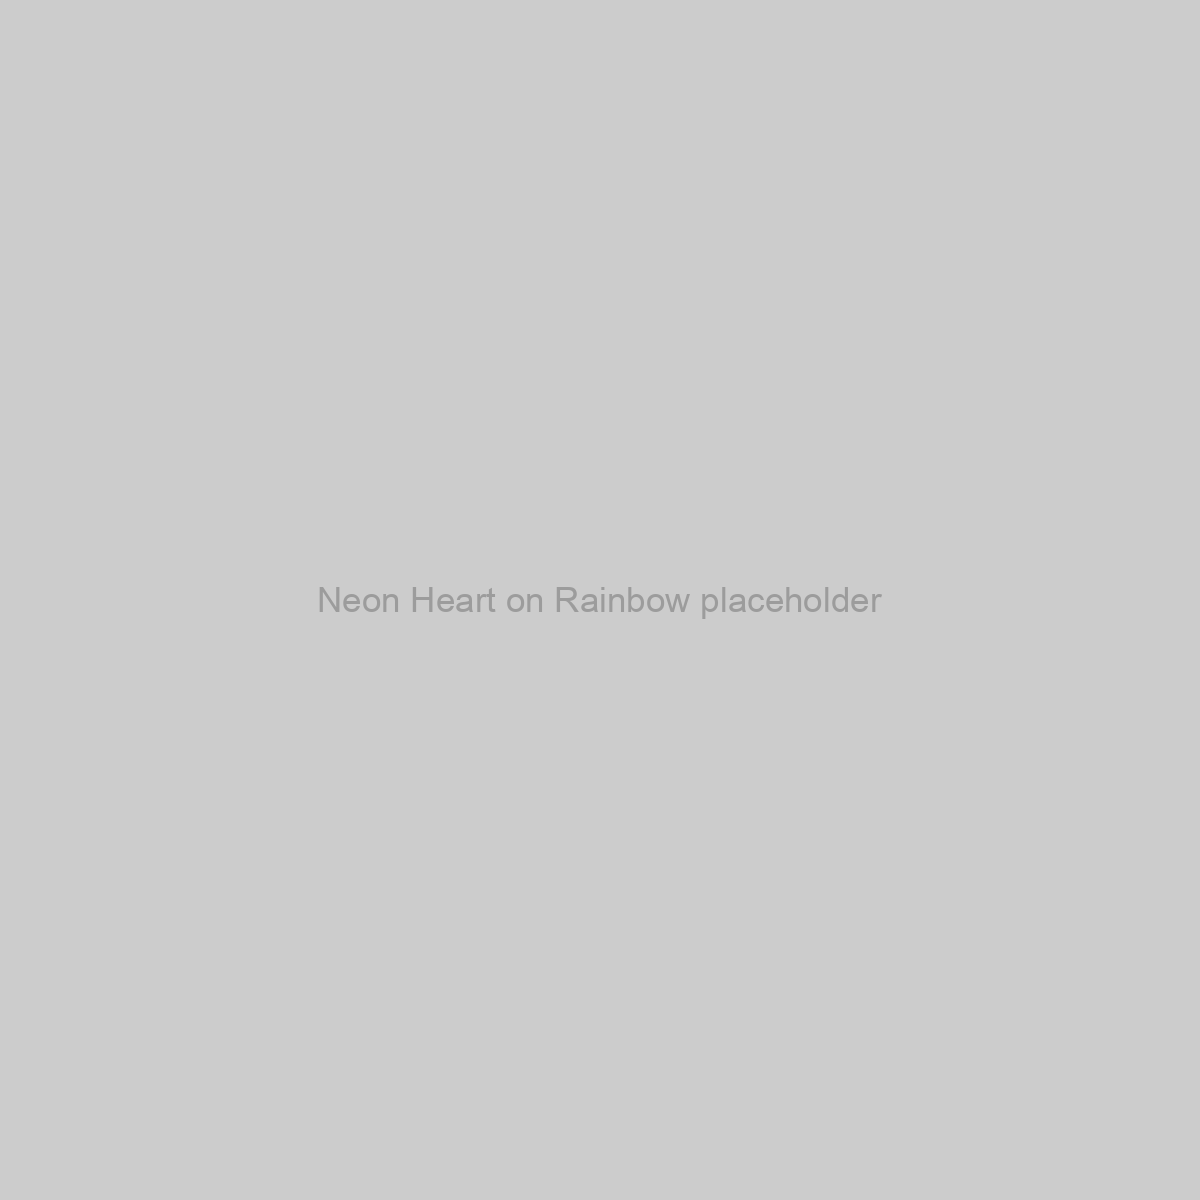 Neon Heart on Rainbow Placeholder Image